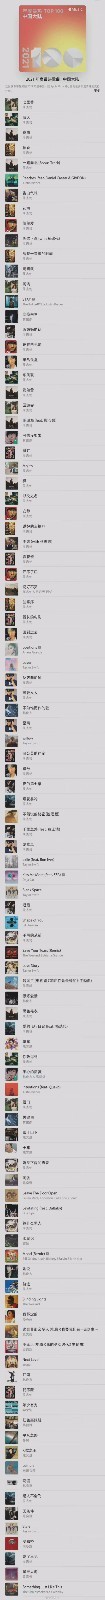 AppleMusic中国大陆21年最热歌曲榜单 周杰伦霸榜